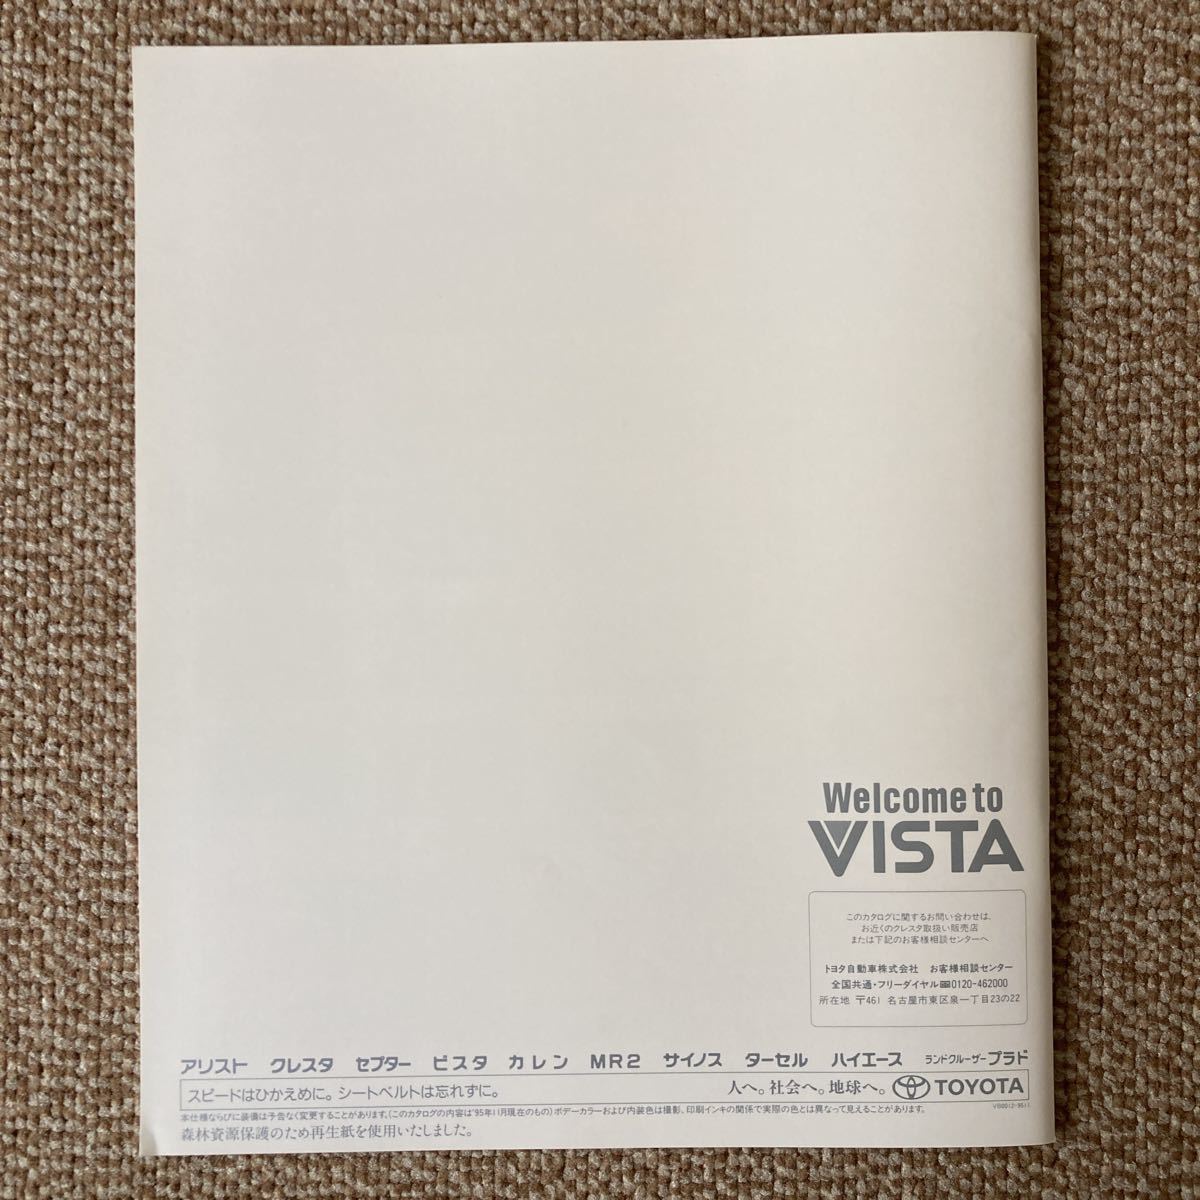  Toyota Cresta каталог 1995 год 11 месяц 